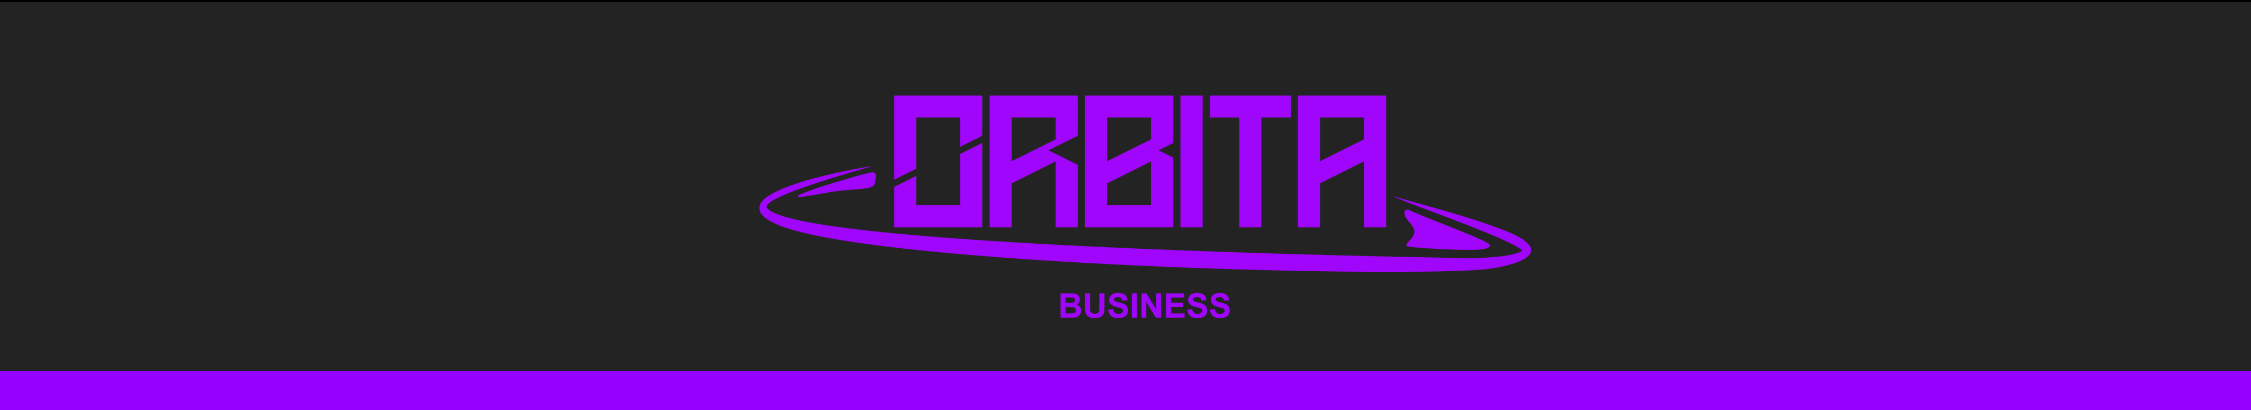 Orbita Business's profile banner